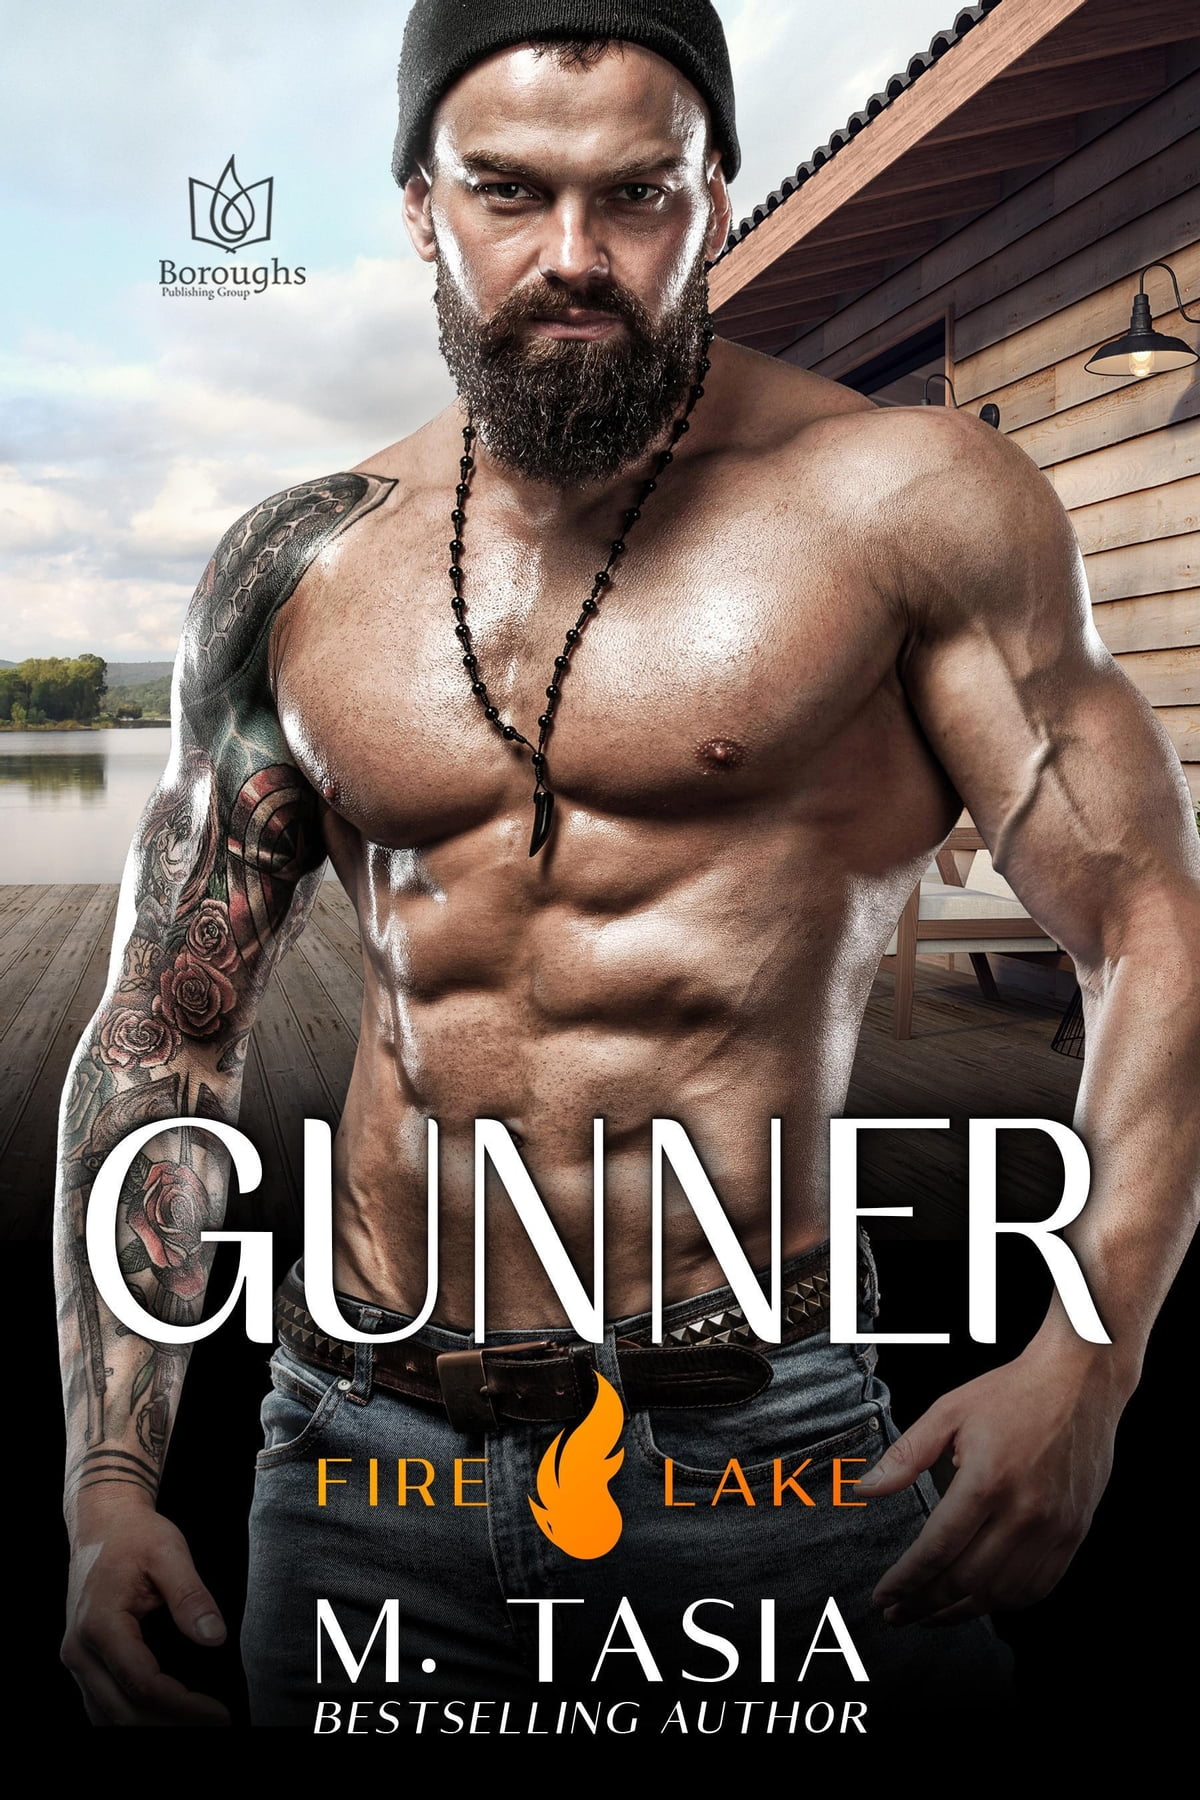 Gunner by M. Tasia PDF Download